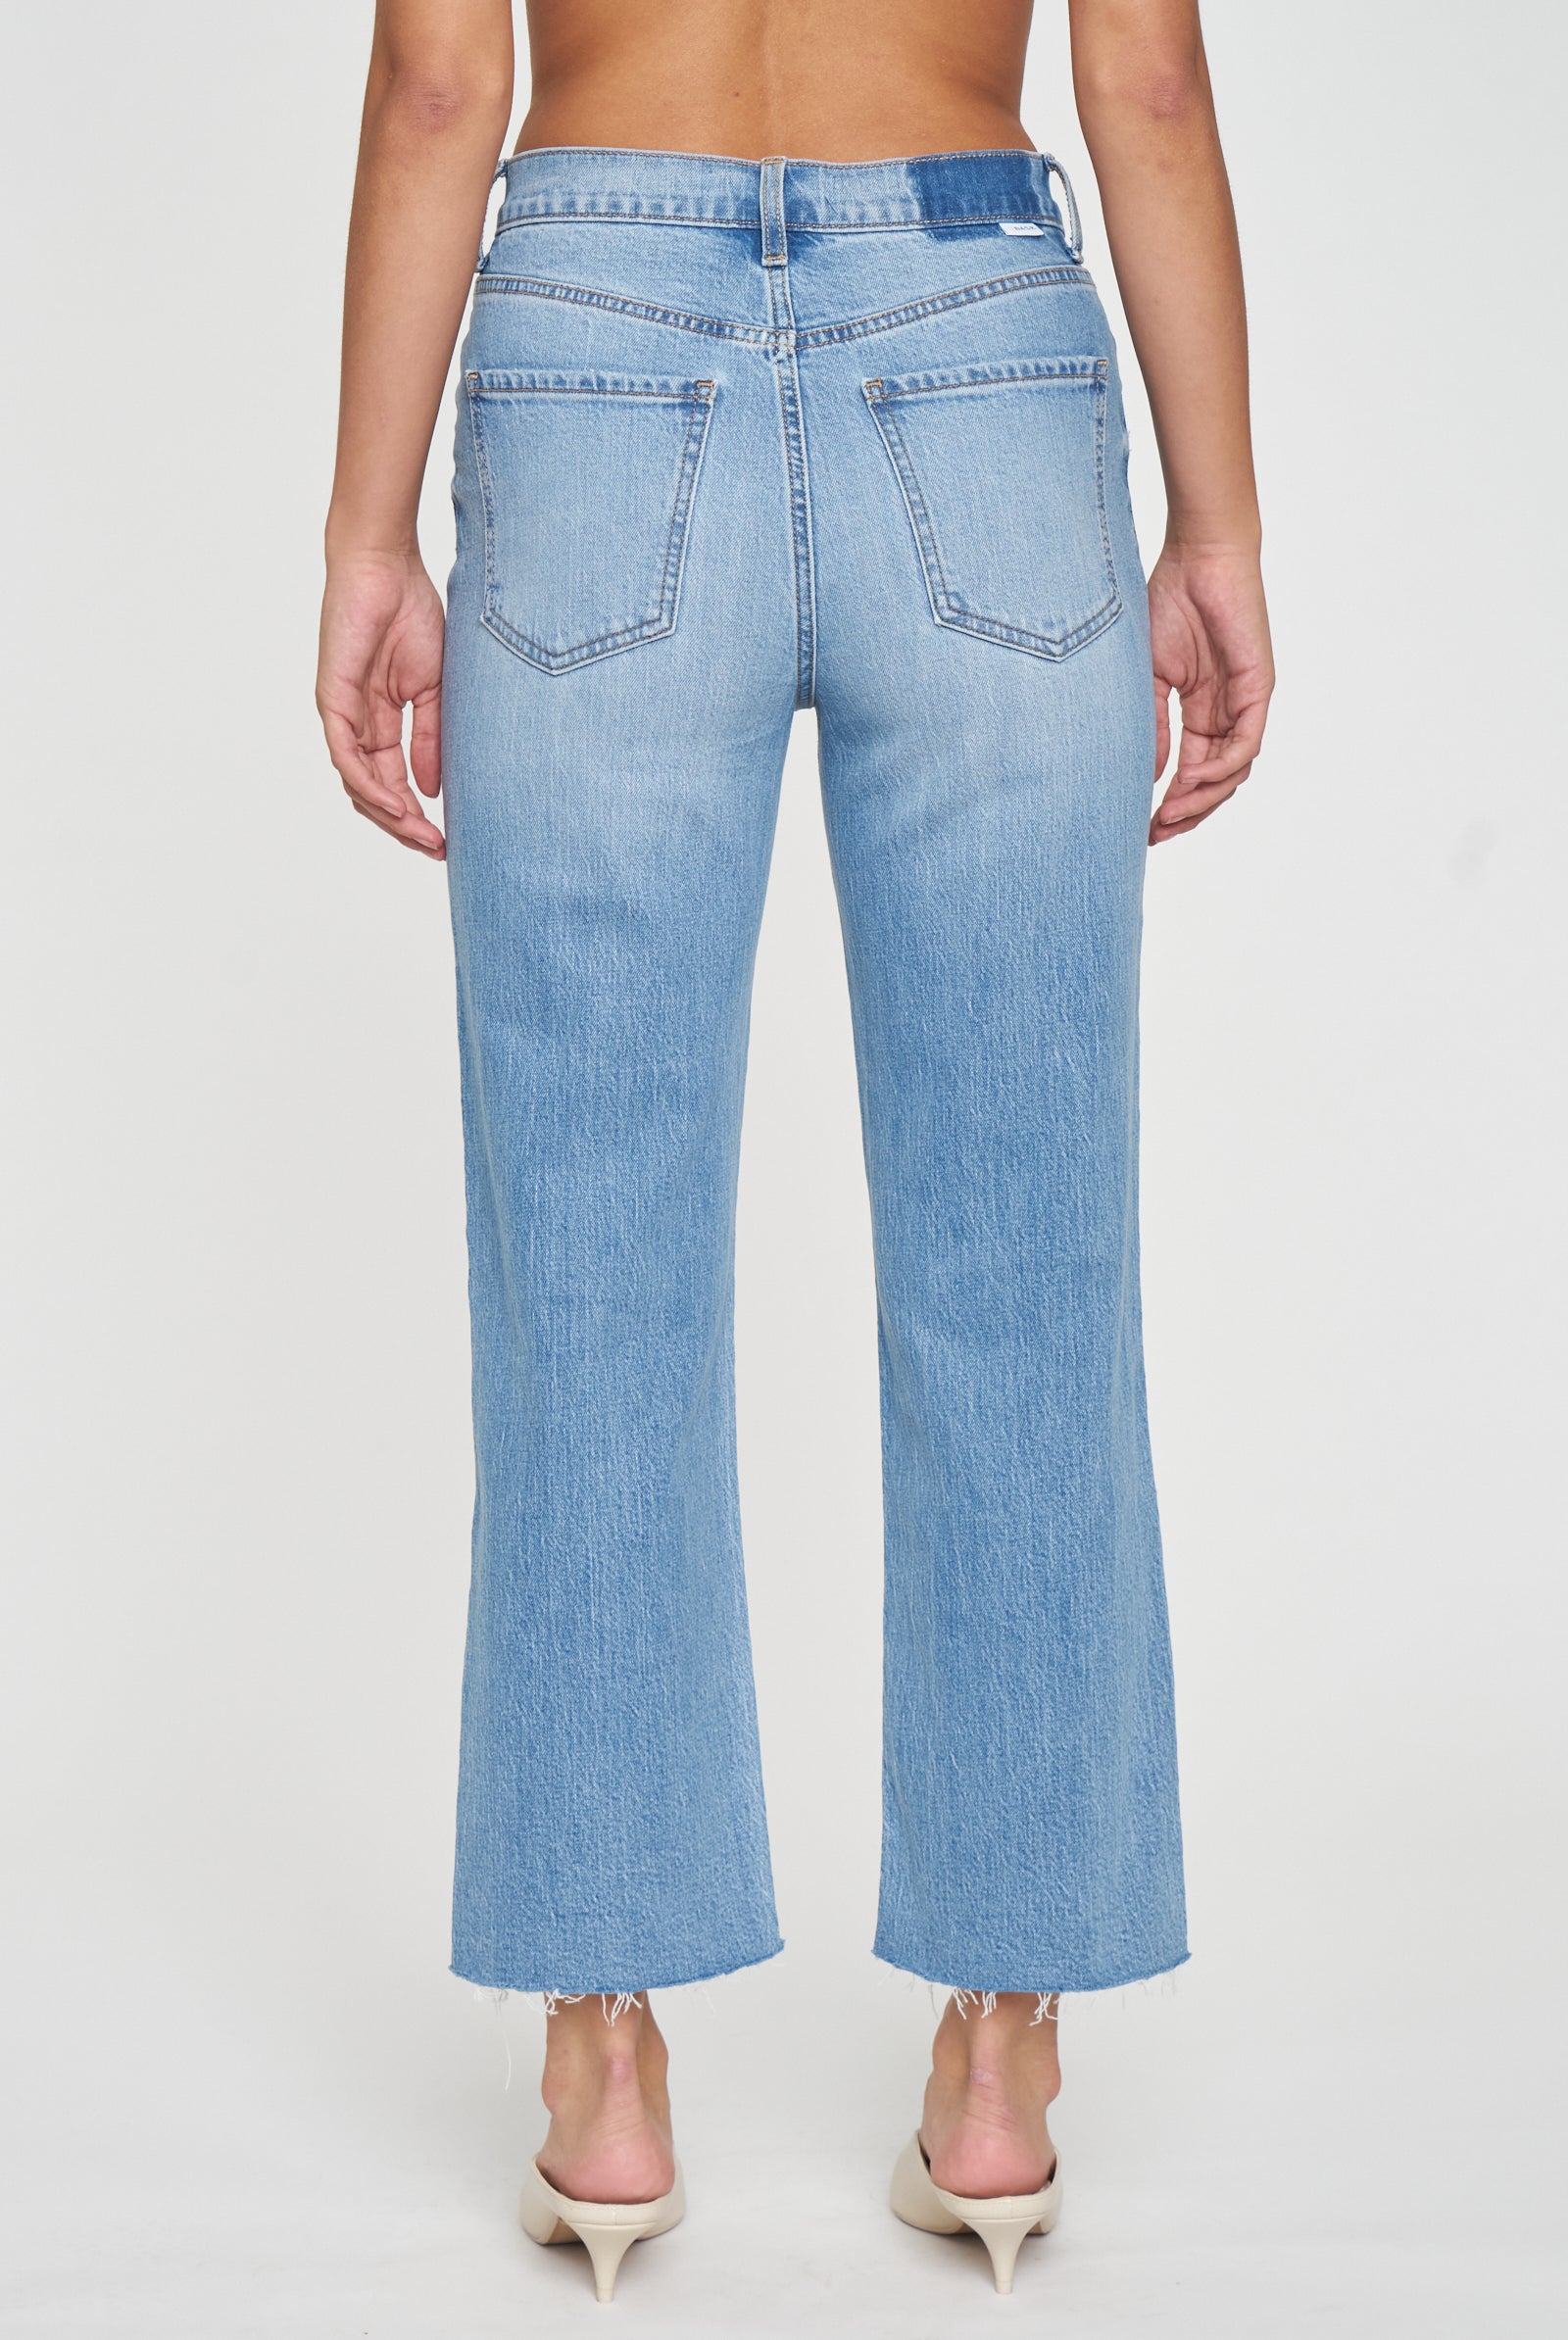 Daze Sundaze Crop Jeans-Denim-Vixen Collection, Day Spa and Women's Boutique Located in Seattle, Washington